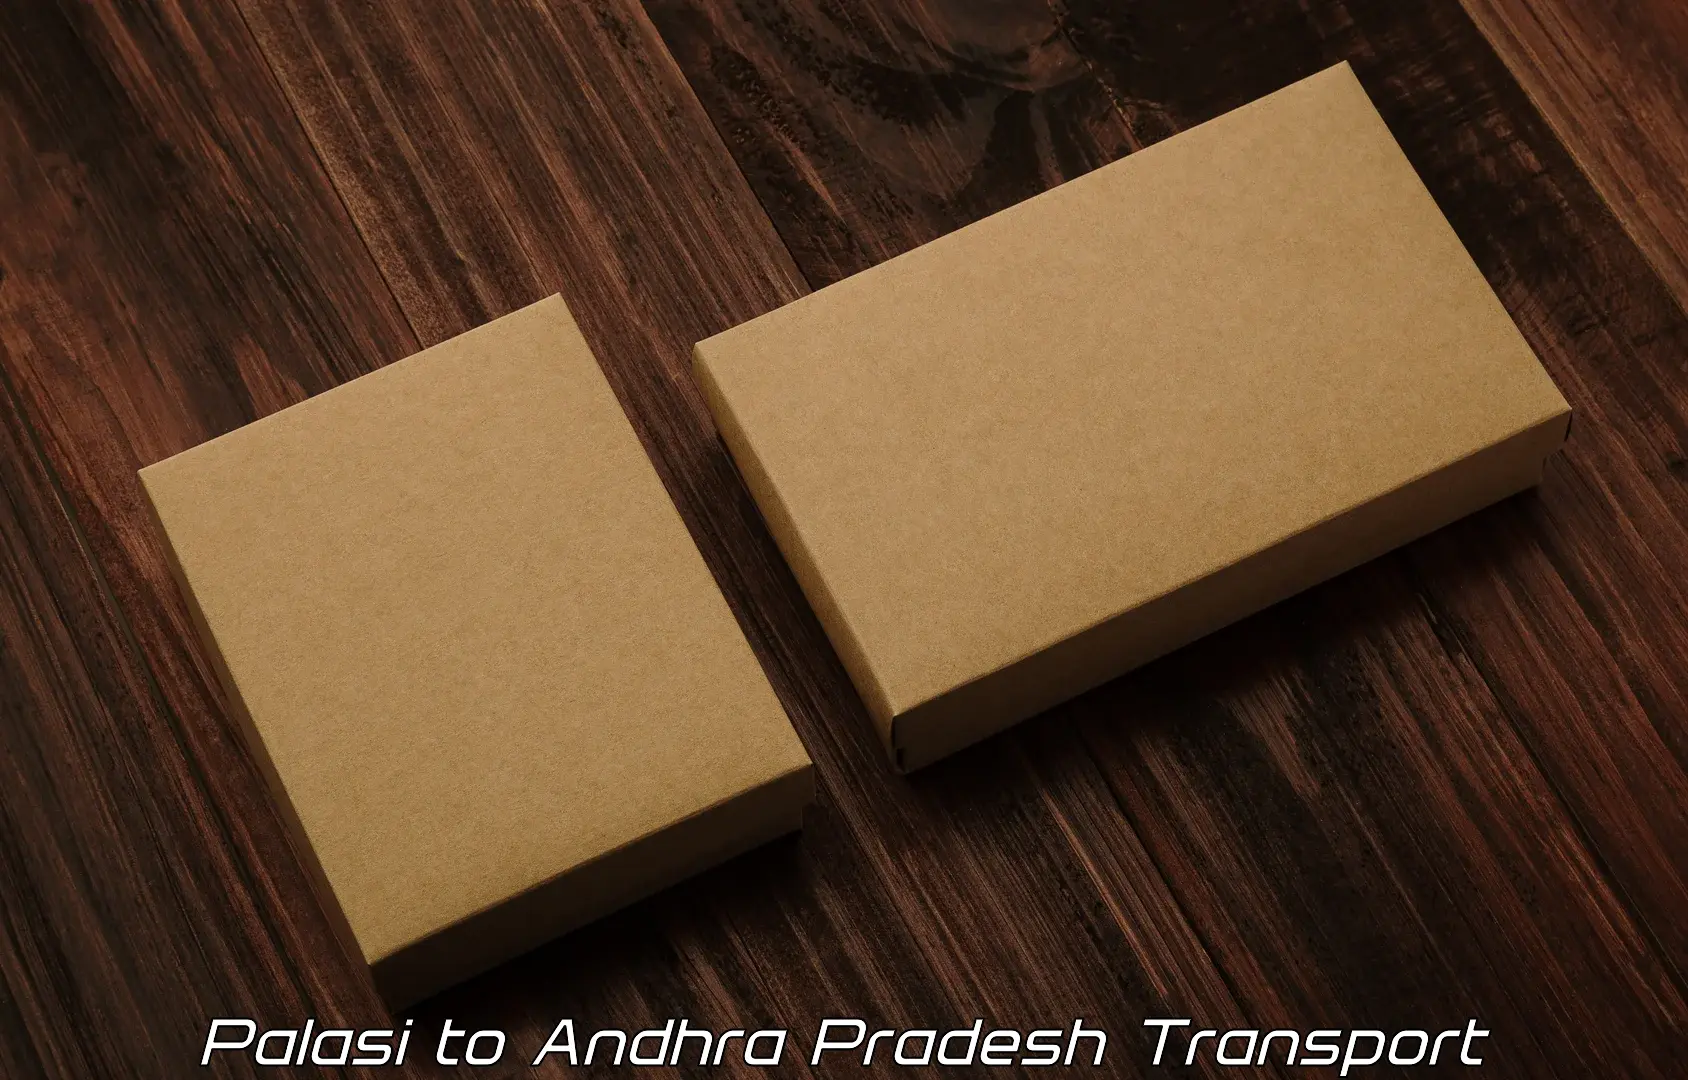 Shipping services in Palasi to Andhra Pradesh